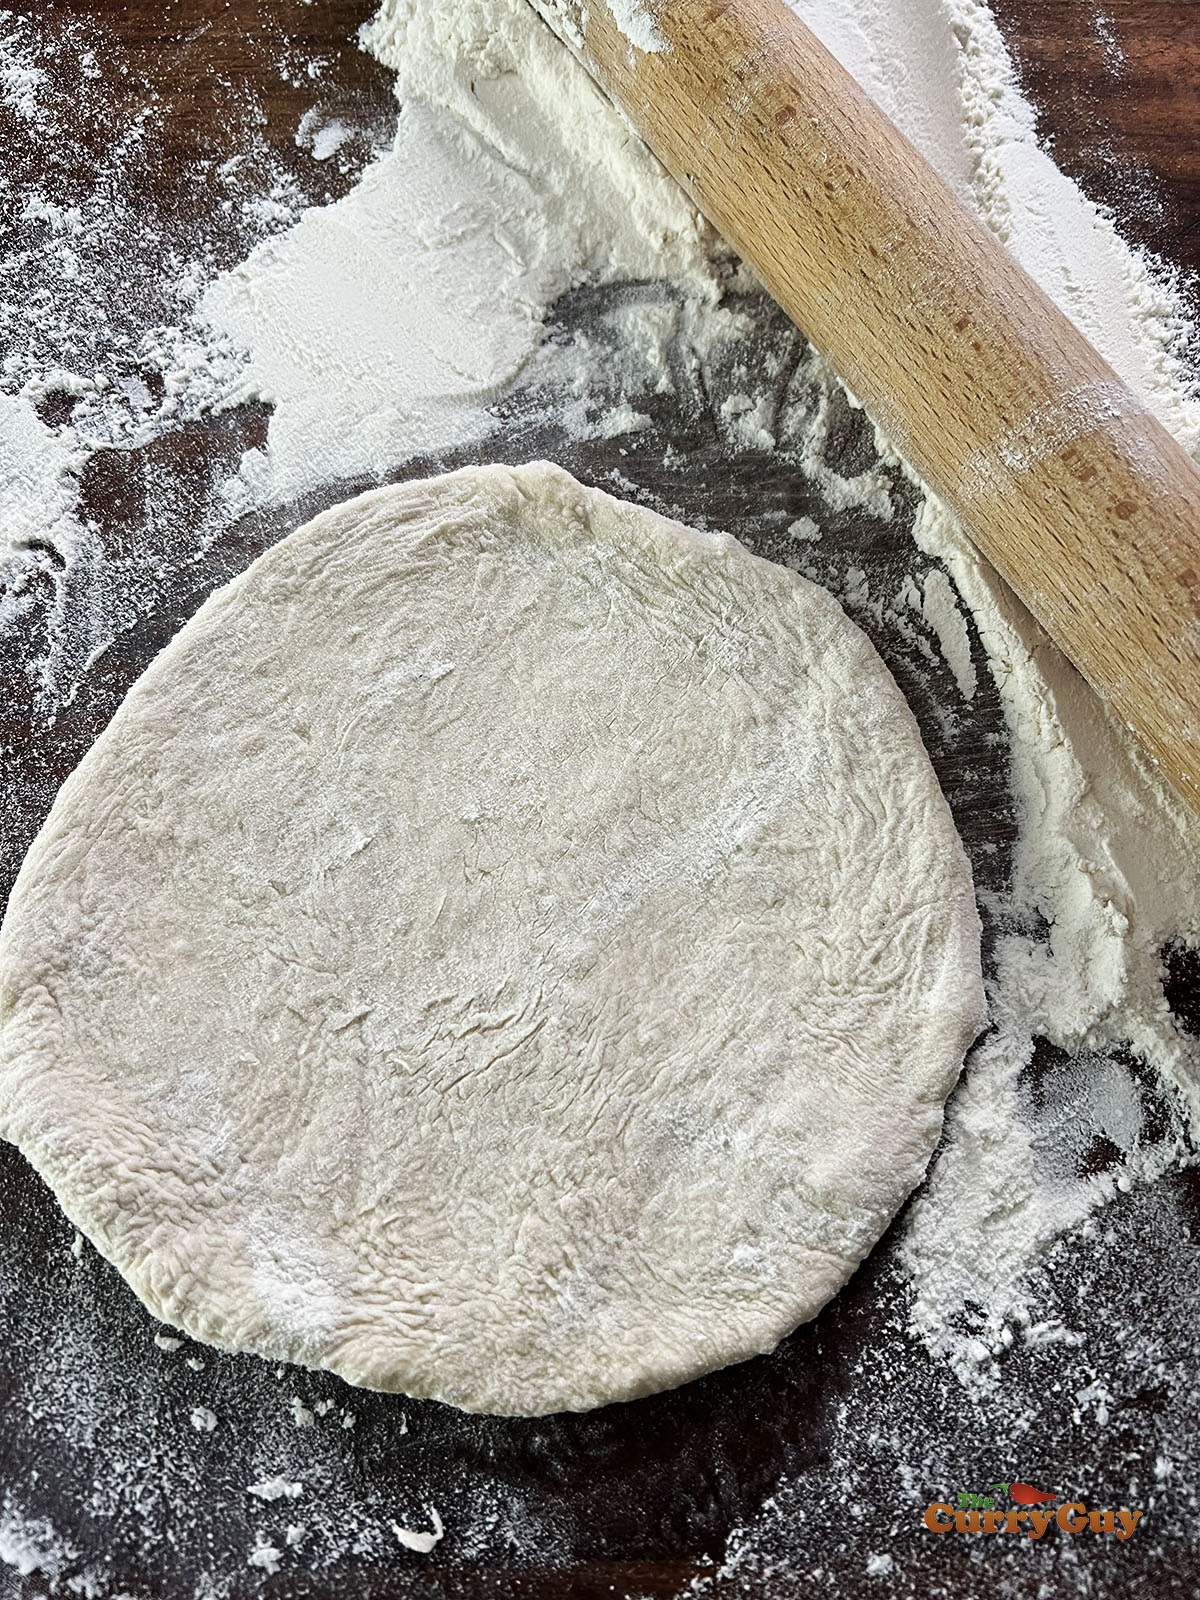 Rolling a dough ball into a round pita shape.